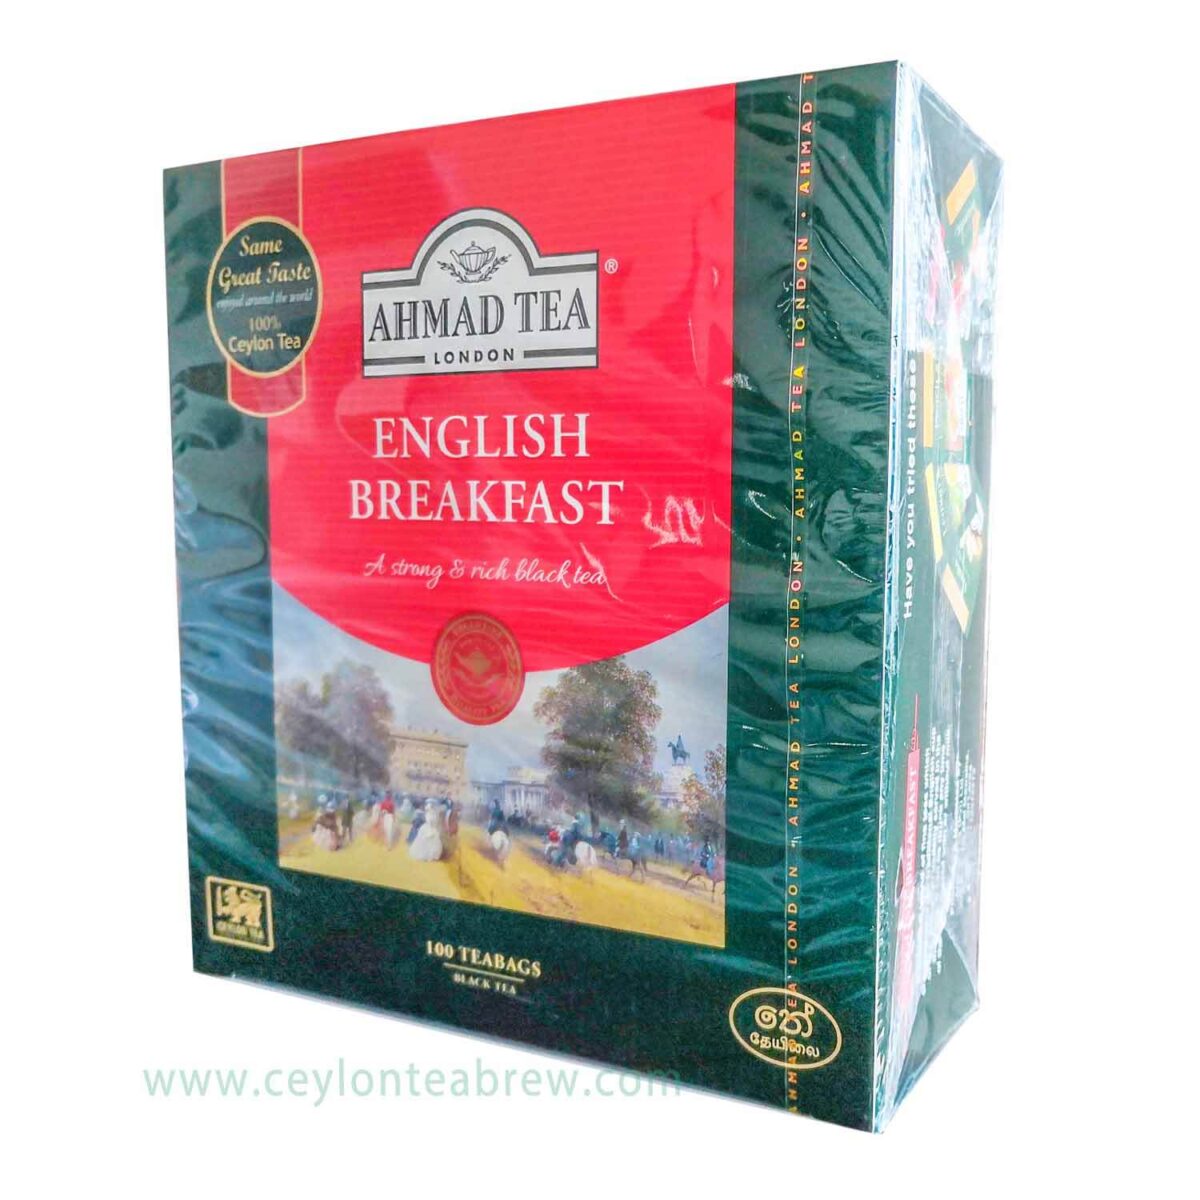 Ahmed Tea London English Breakfast Black Tea bags